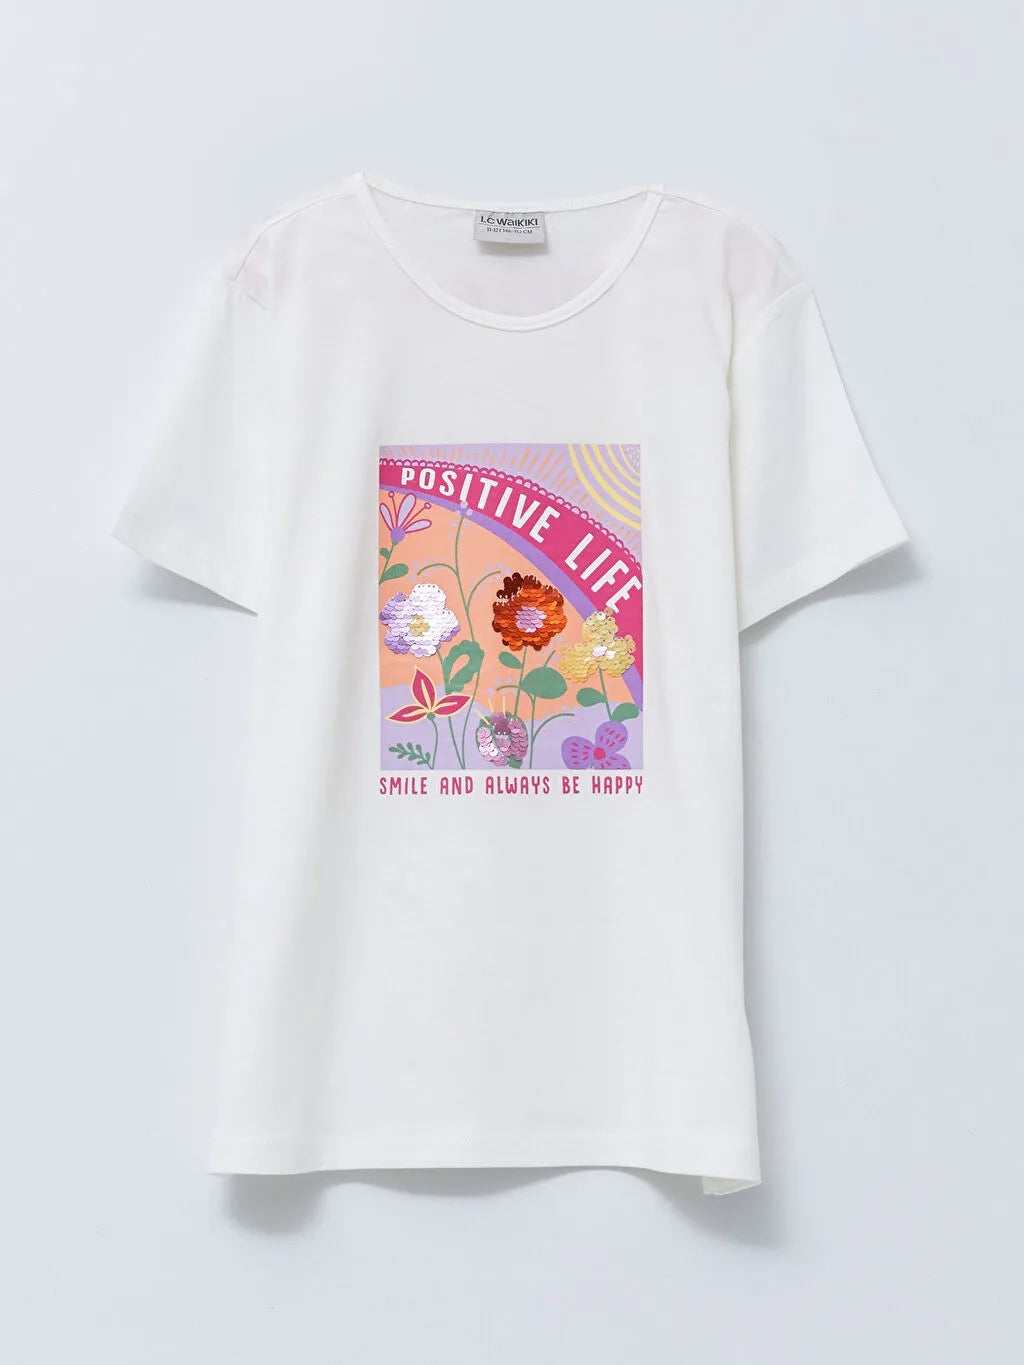 Crew Neck Printed Short Sleeve Cotton Girls T-Shirt And Short Skirt